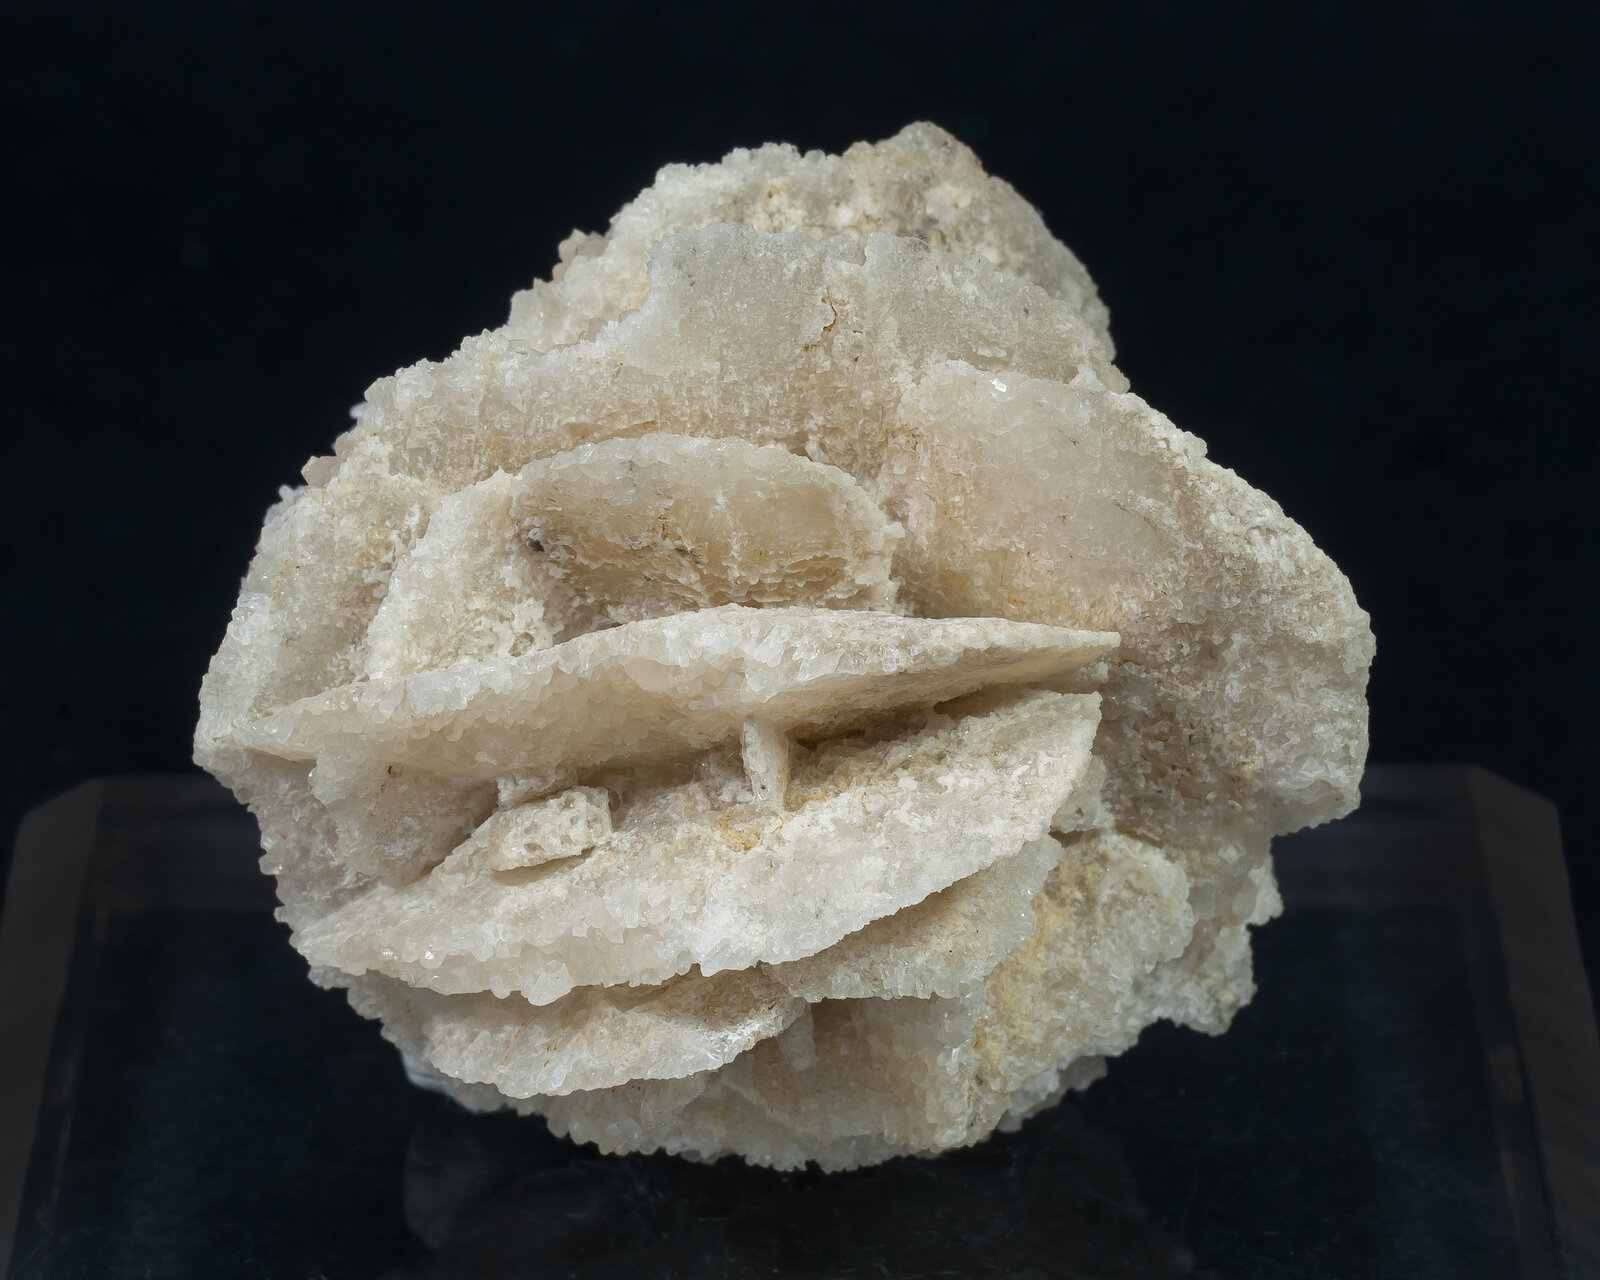 specimens/s_imagesAN2/Calcite-NJ11AN2f.jpg